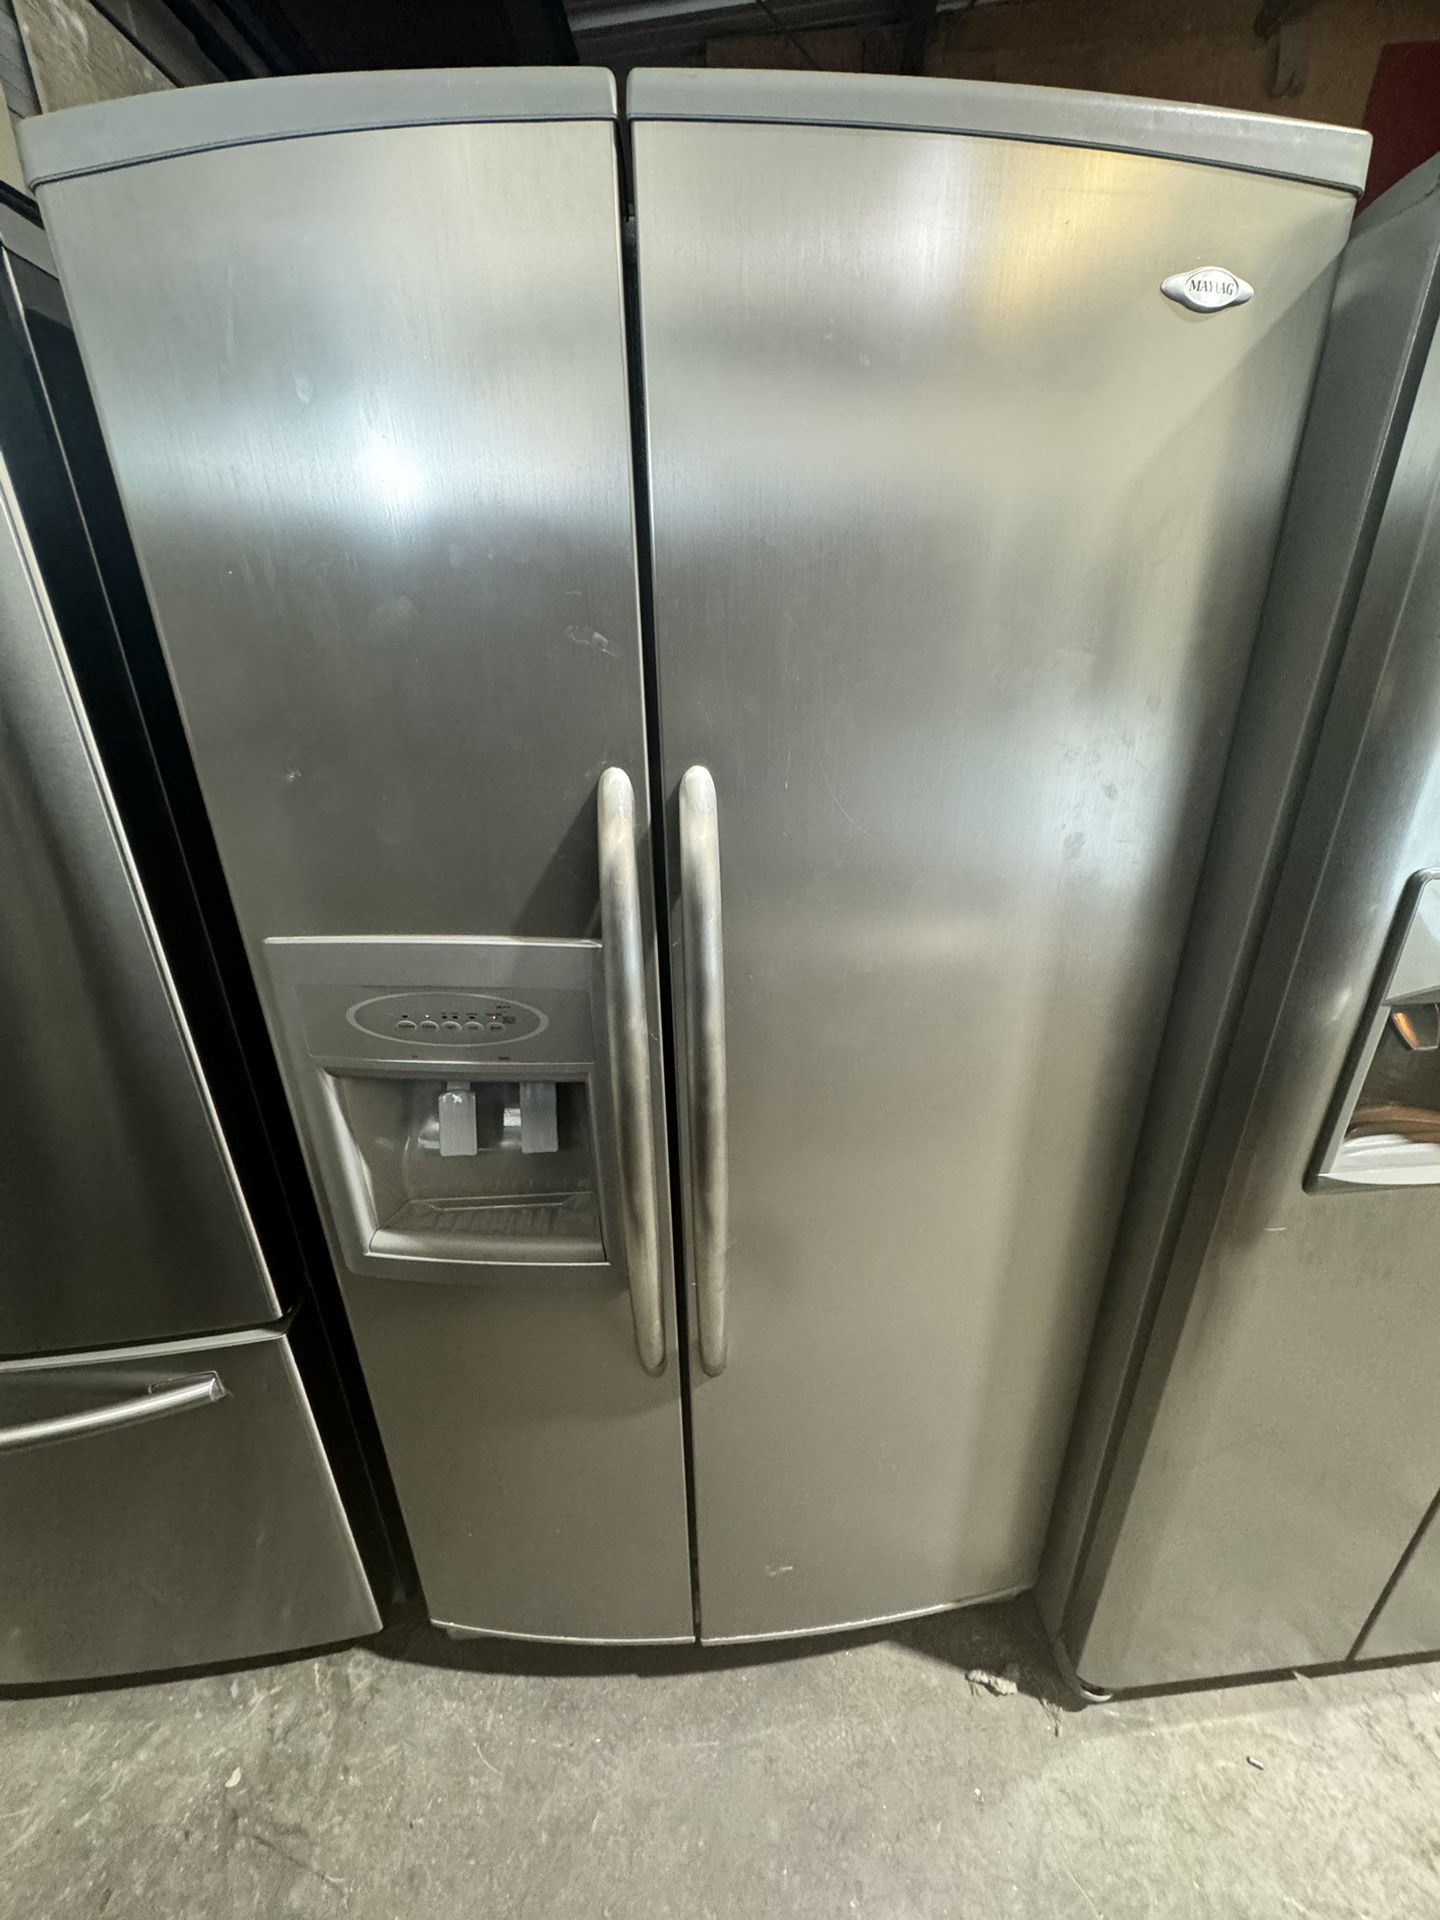 Maytag Refrigerator Stainless Steel 36 "width 